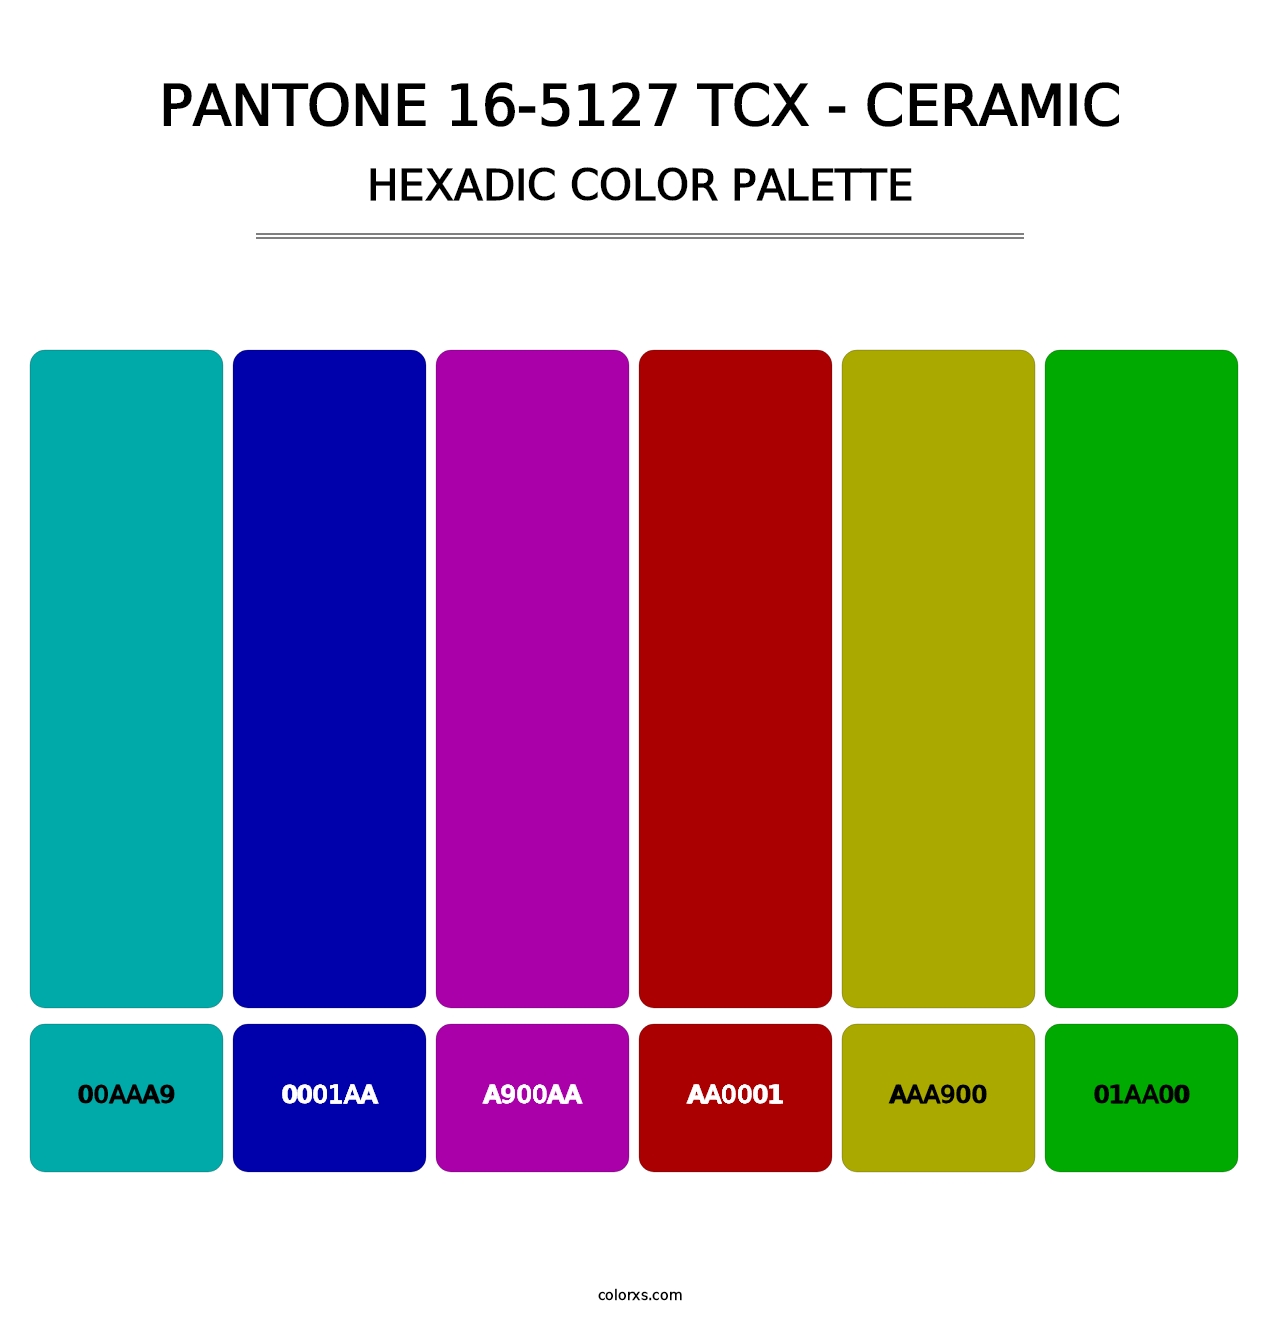 PANTONE 16-5127 TCX - Ceramic - Hexadic Color Palette